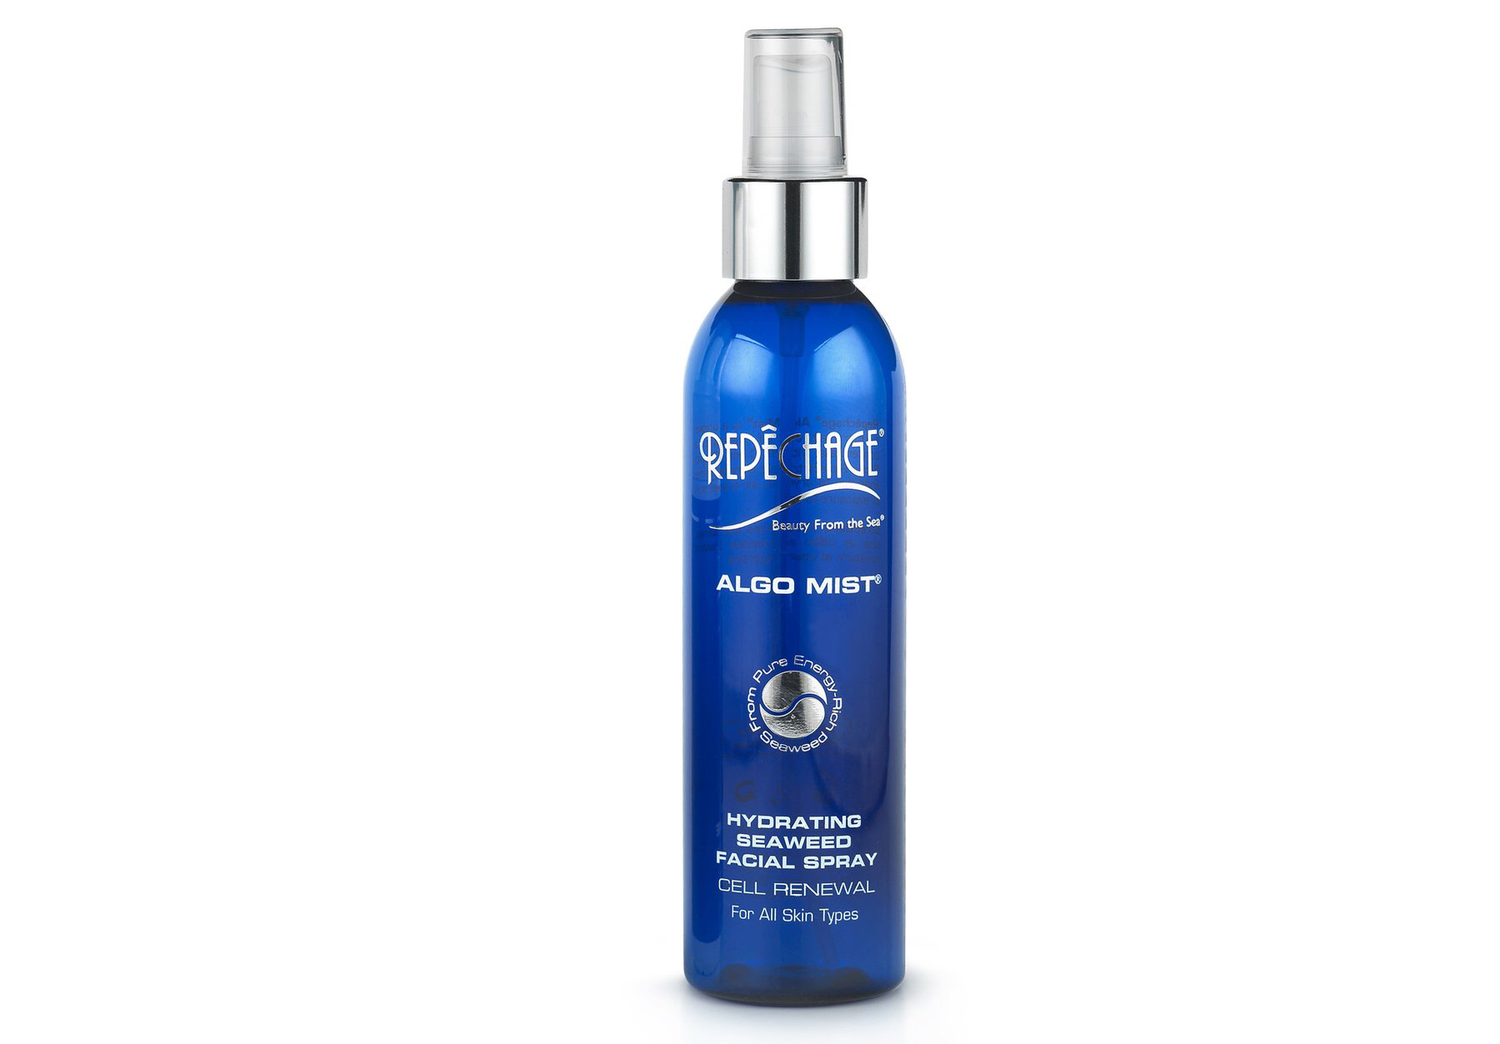 Algo Mist® Hydrating Seaweed Facial Spray